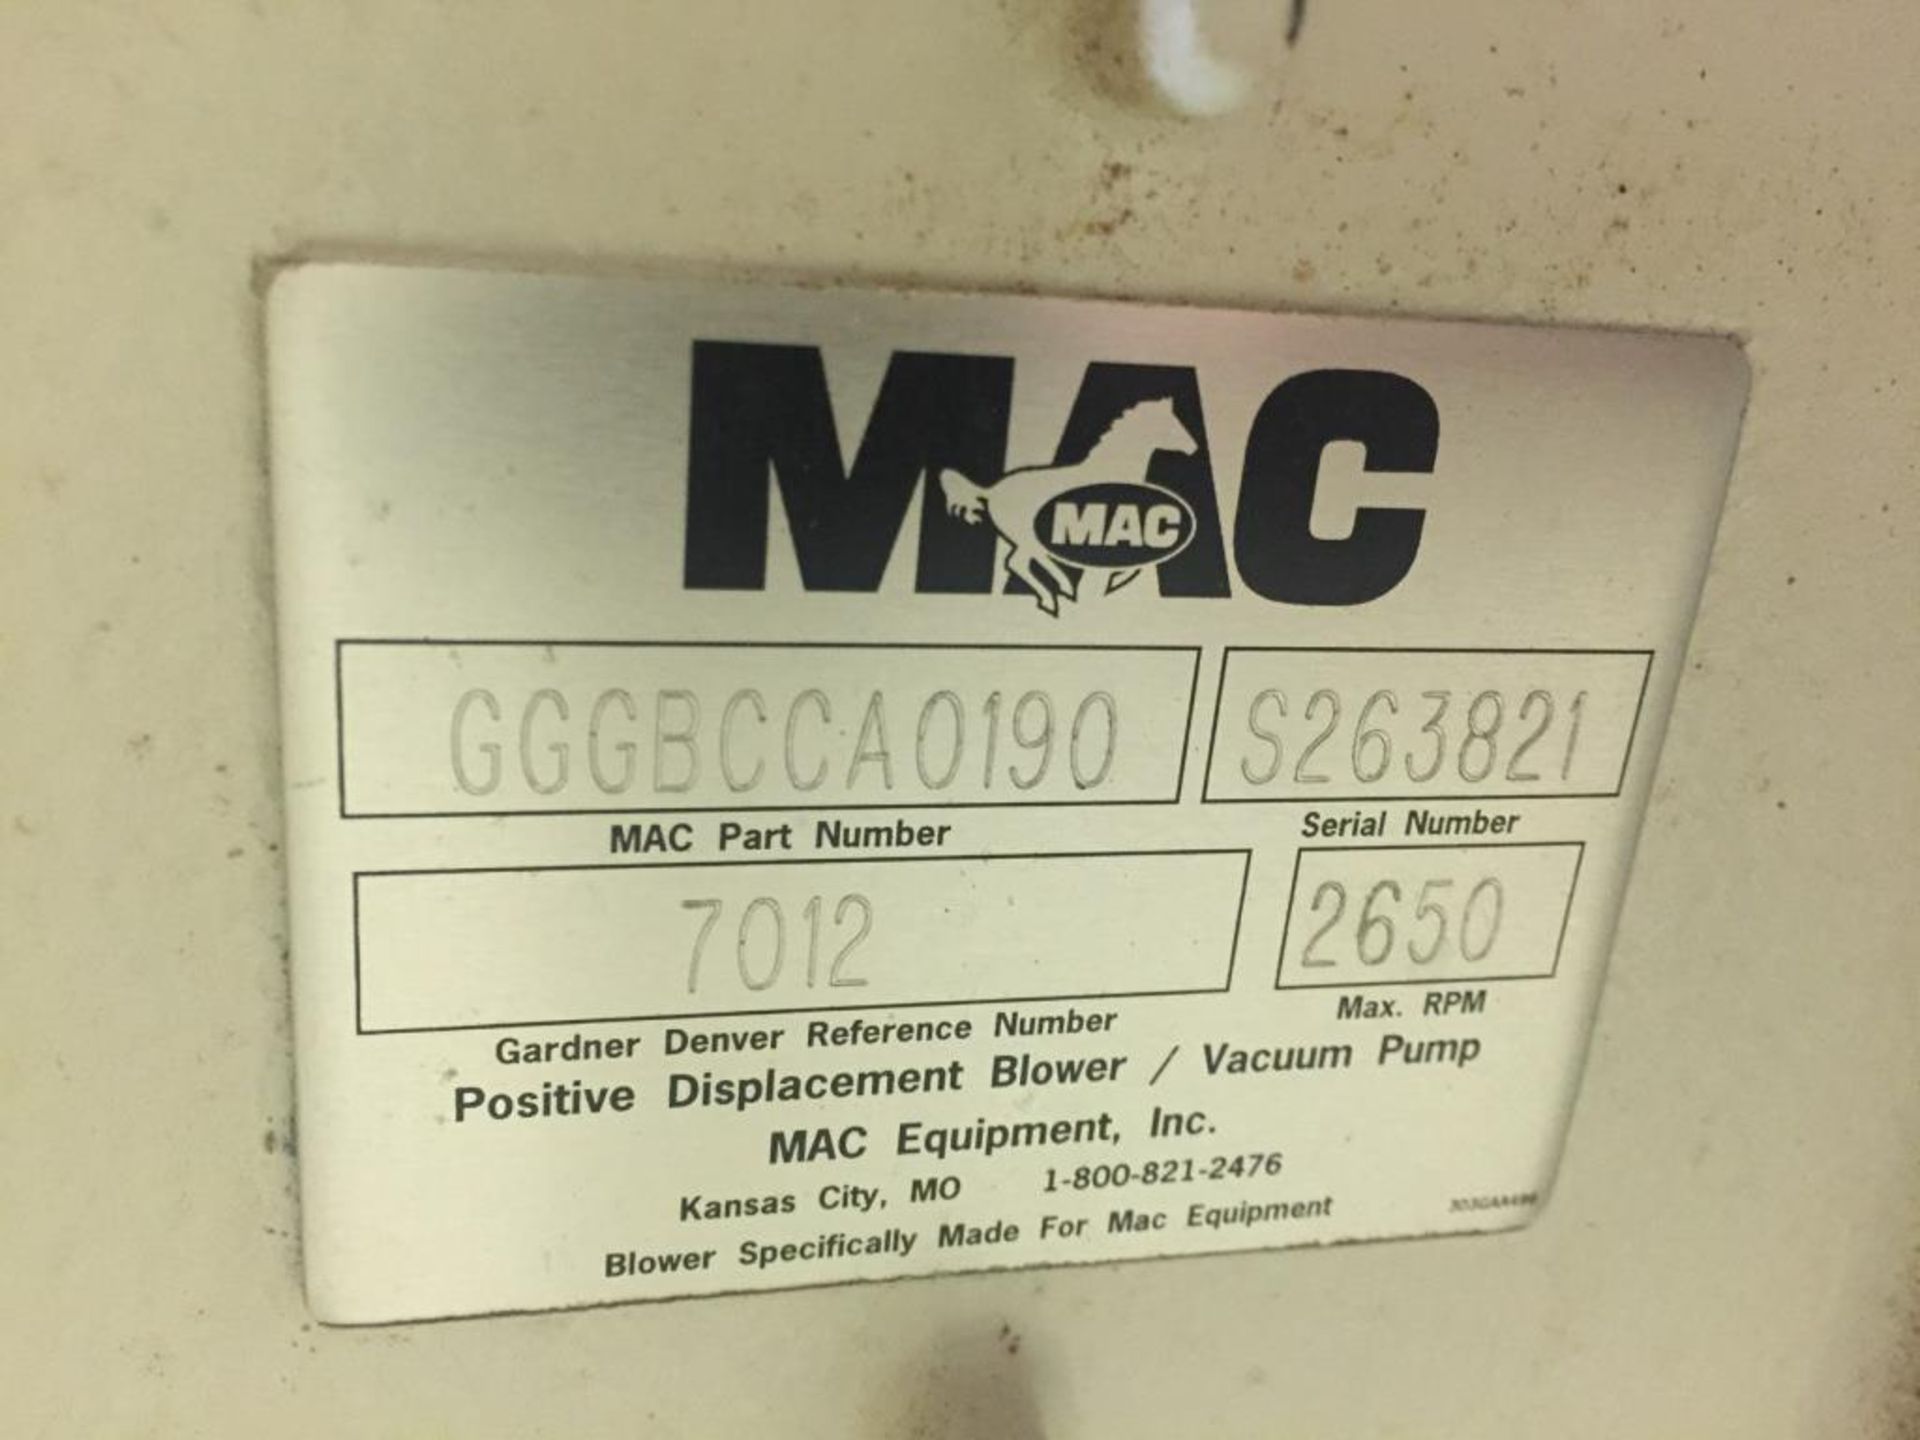 MAC Blower Package Model GGGBCCA0190 S/N S263821 GD REF # 7012 MAX RPM 2650 50HP - Image 5 of 5